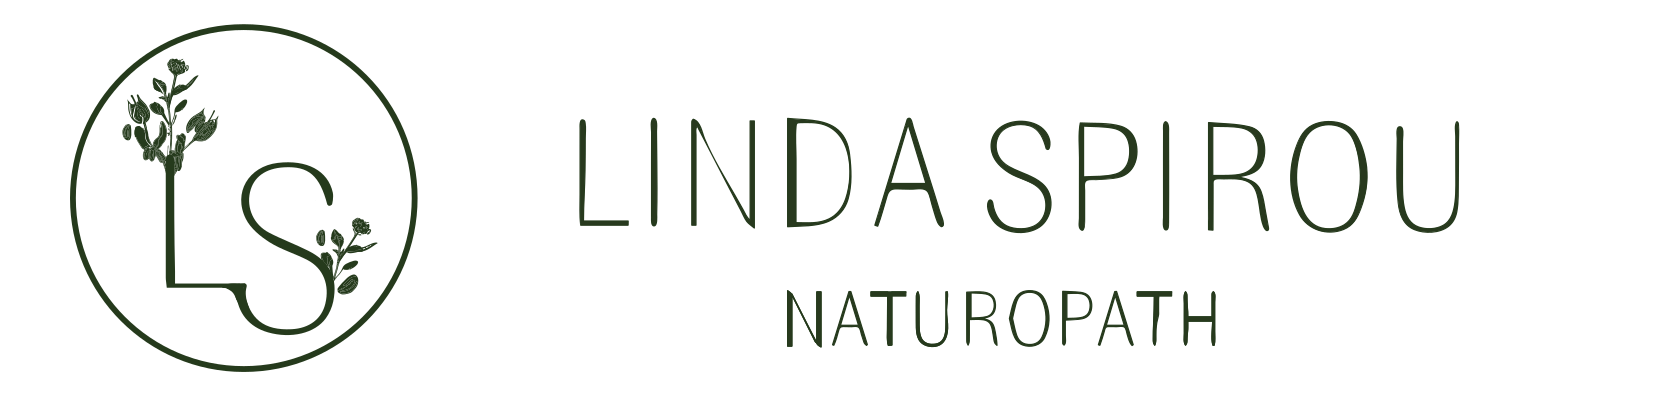 Linda Spirou Naturopath